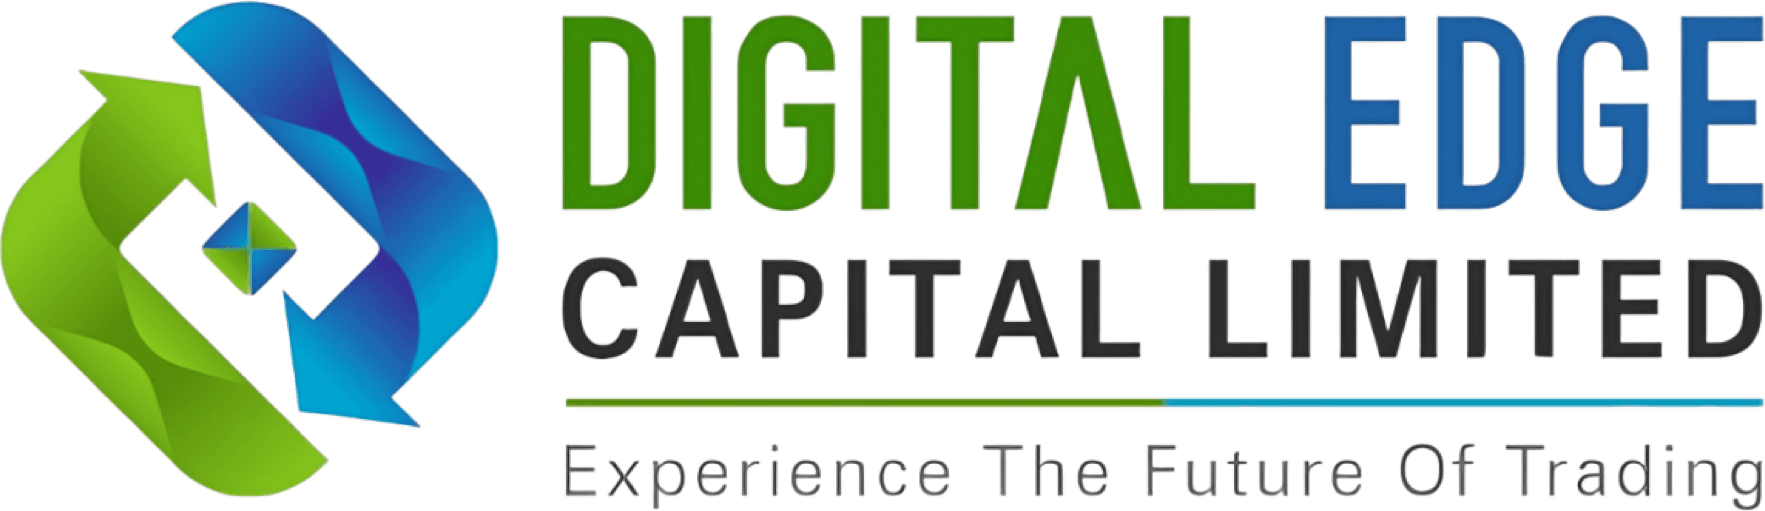 Digital edge capital